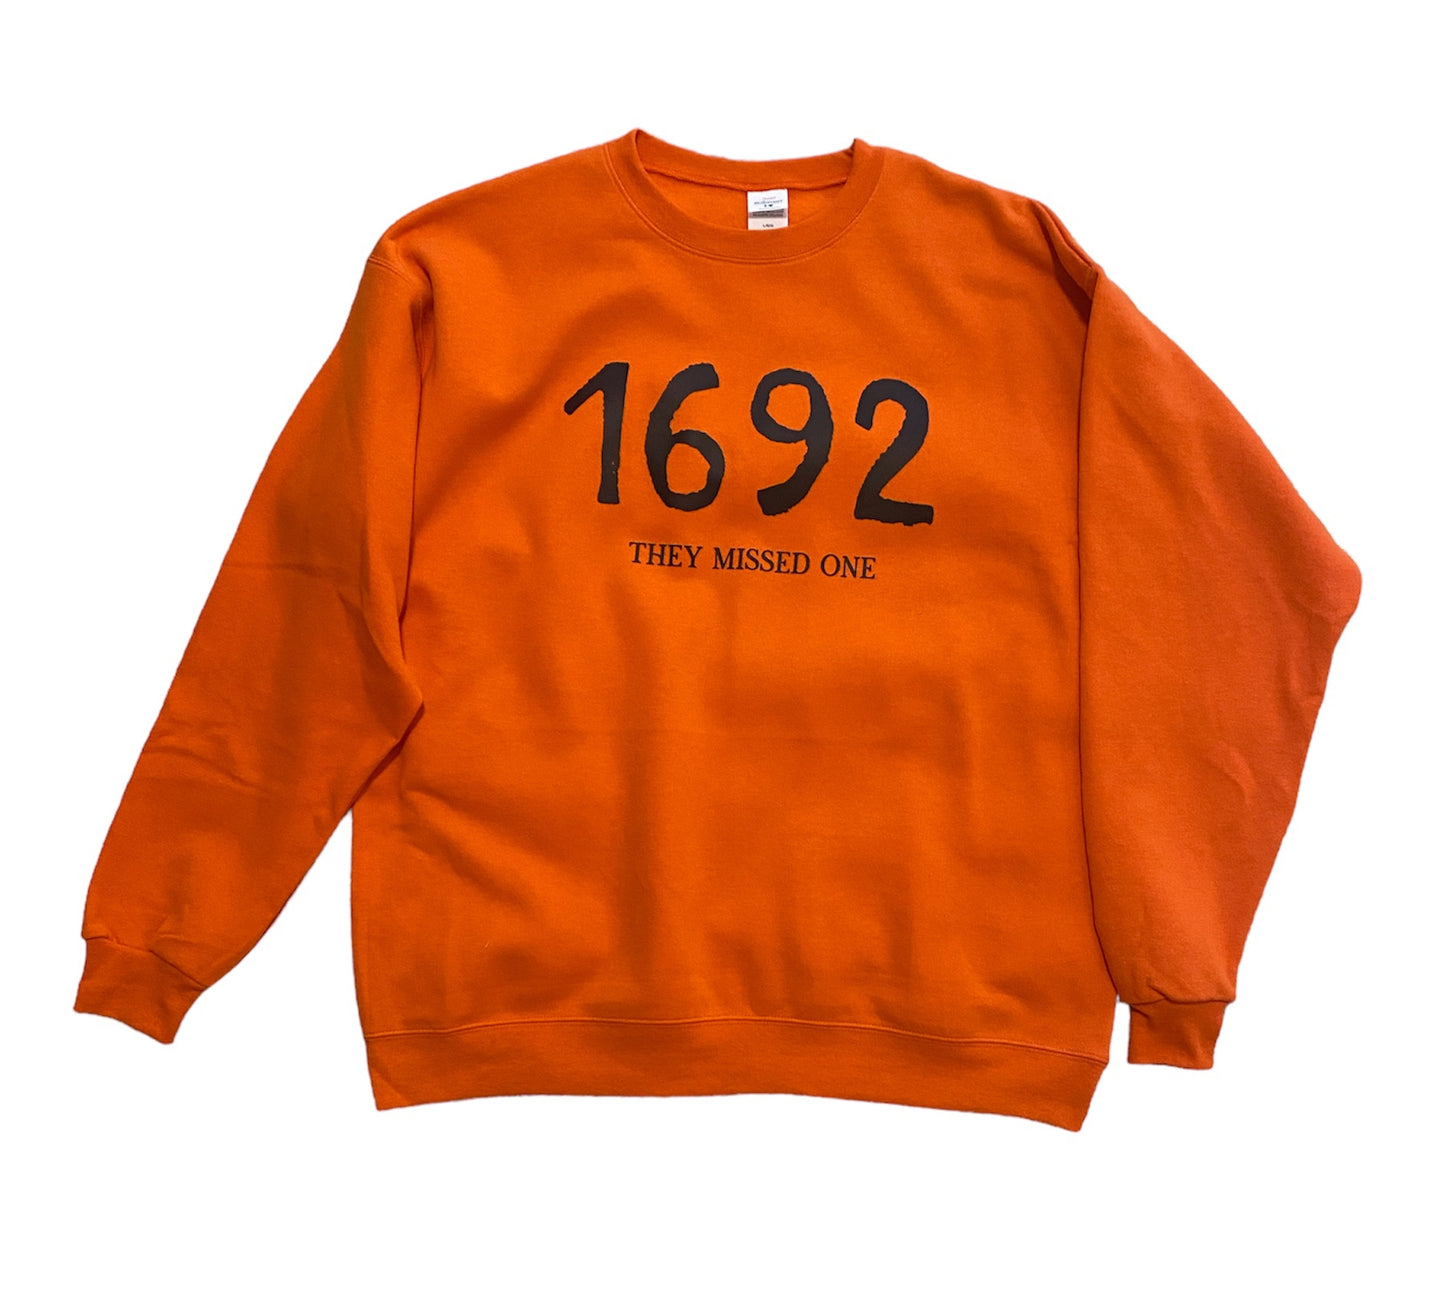 1692 They Missed One sweatshirt